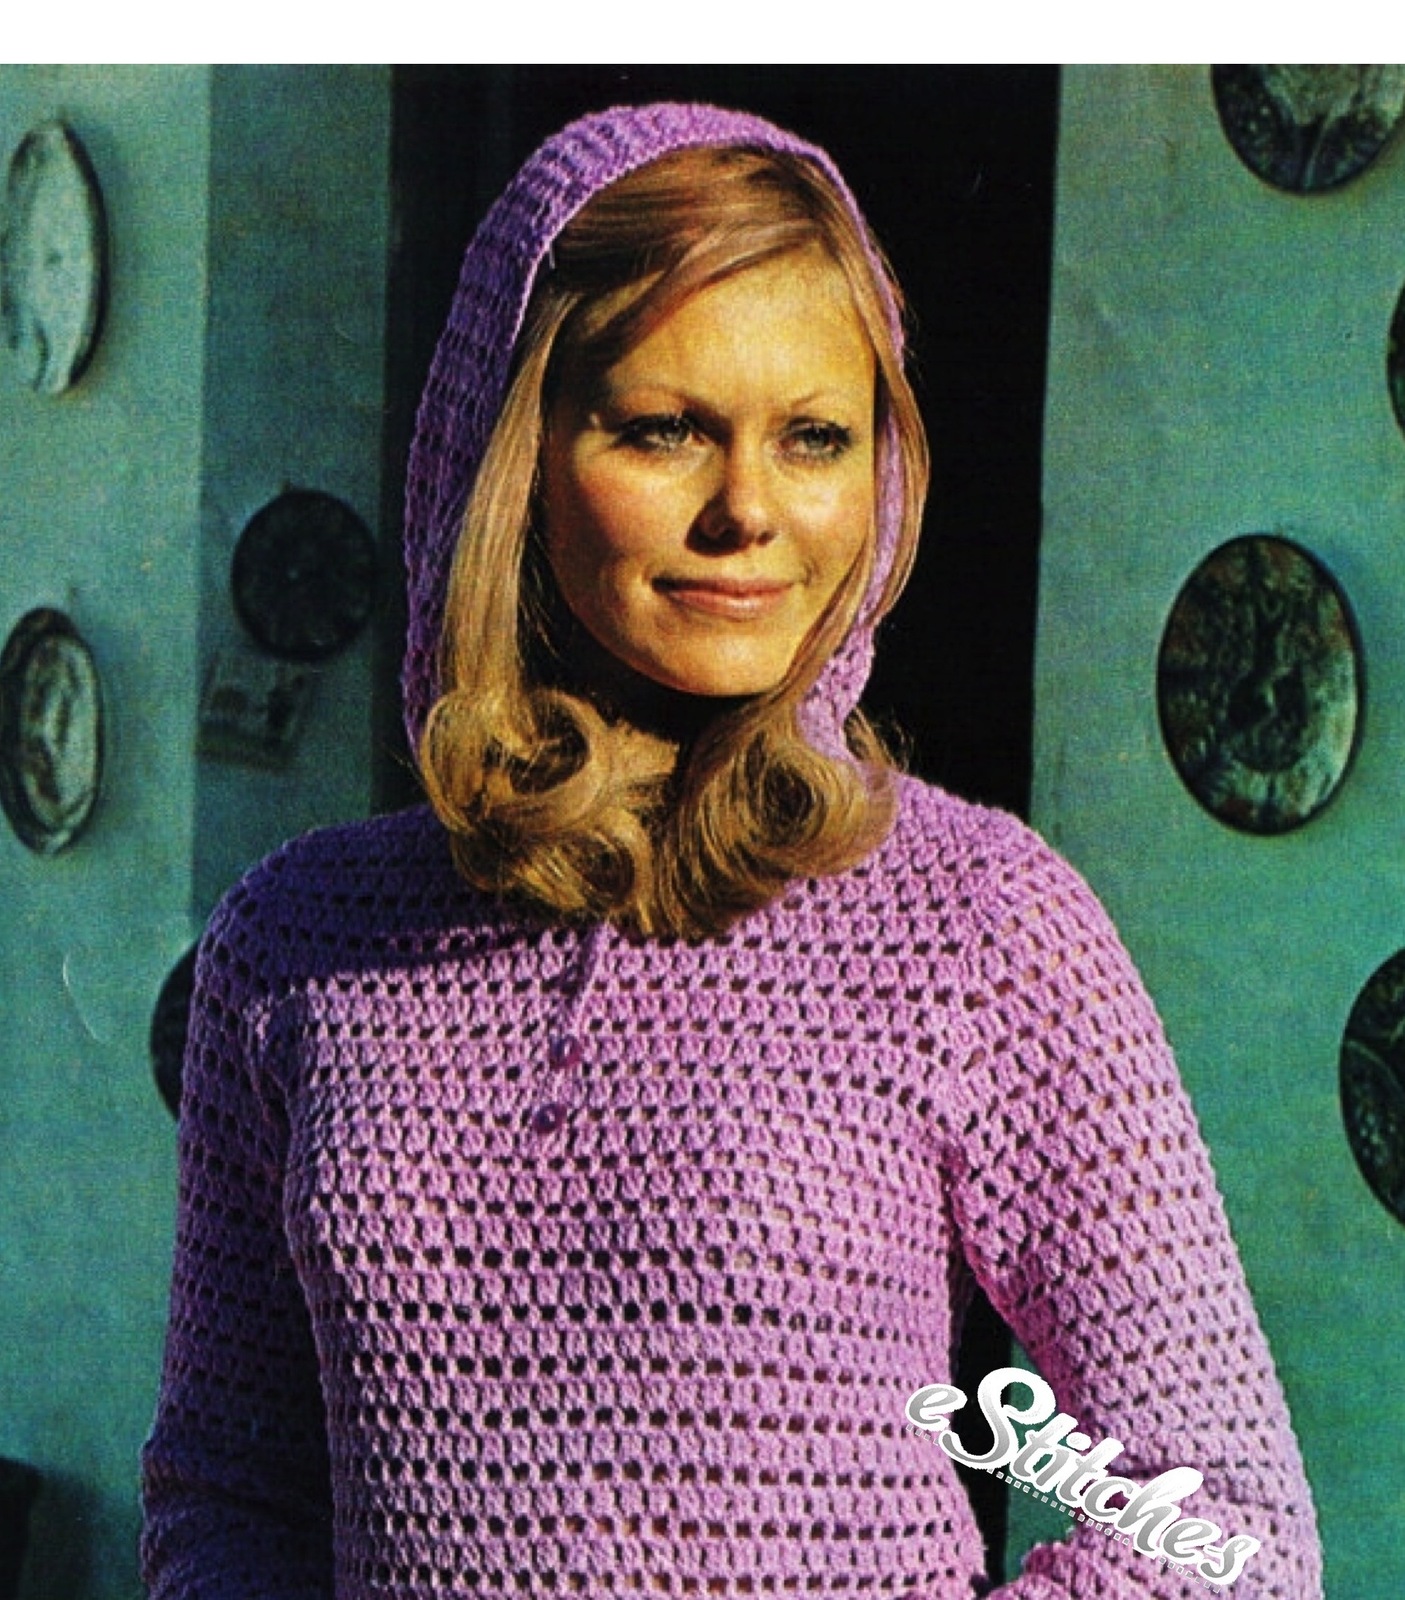 1970s Hooded Tunic or Hoodie Shirt - Crochet pattern (PDF 1972) - $3.75